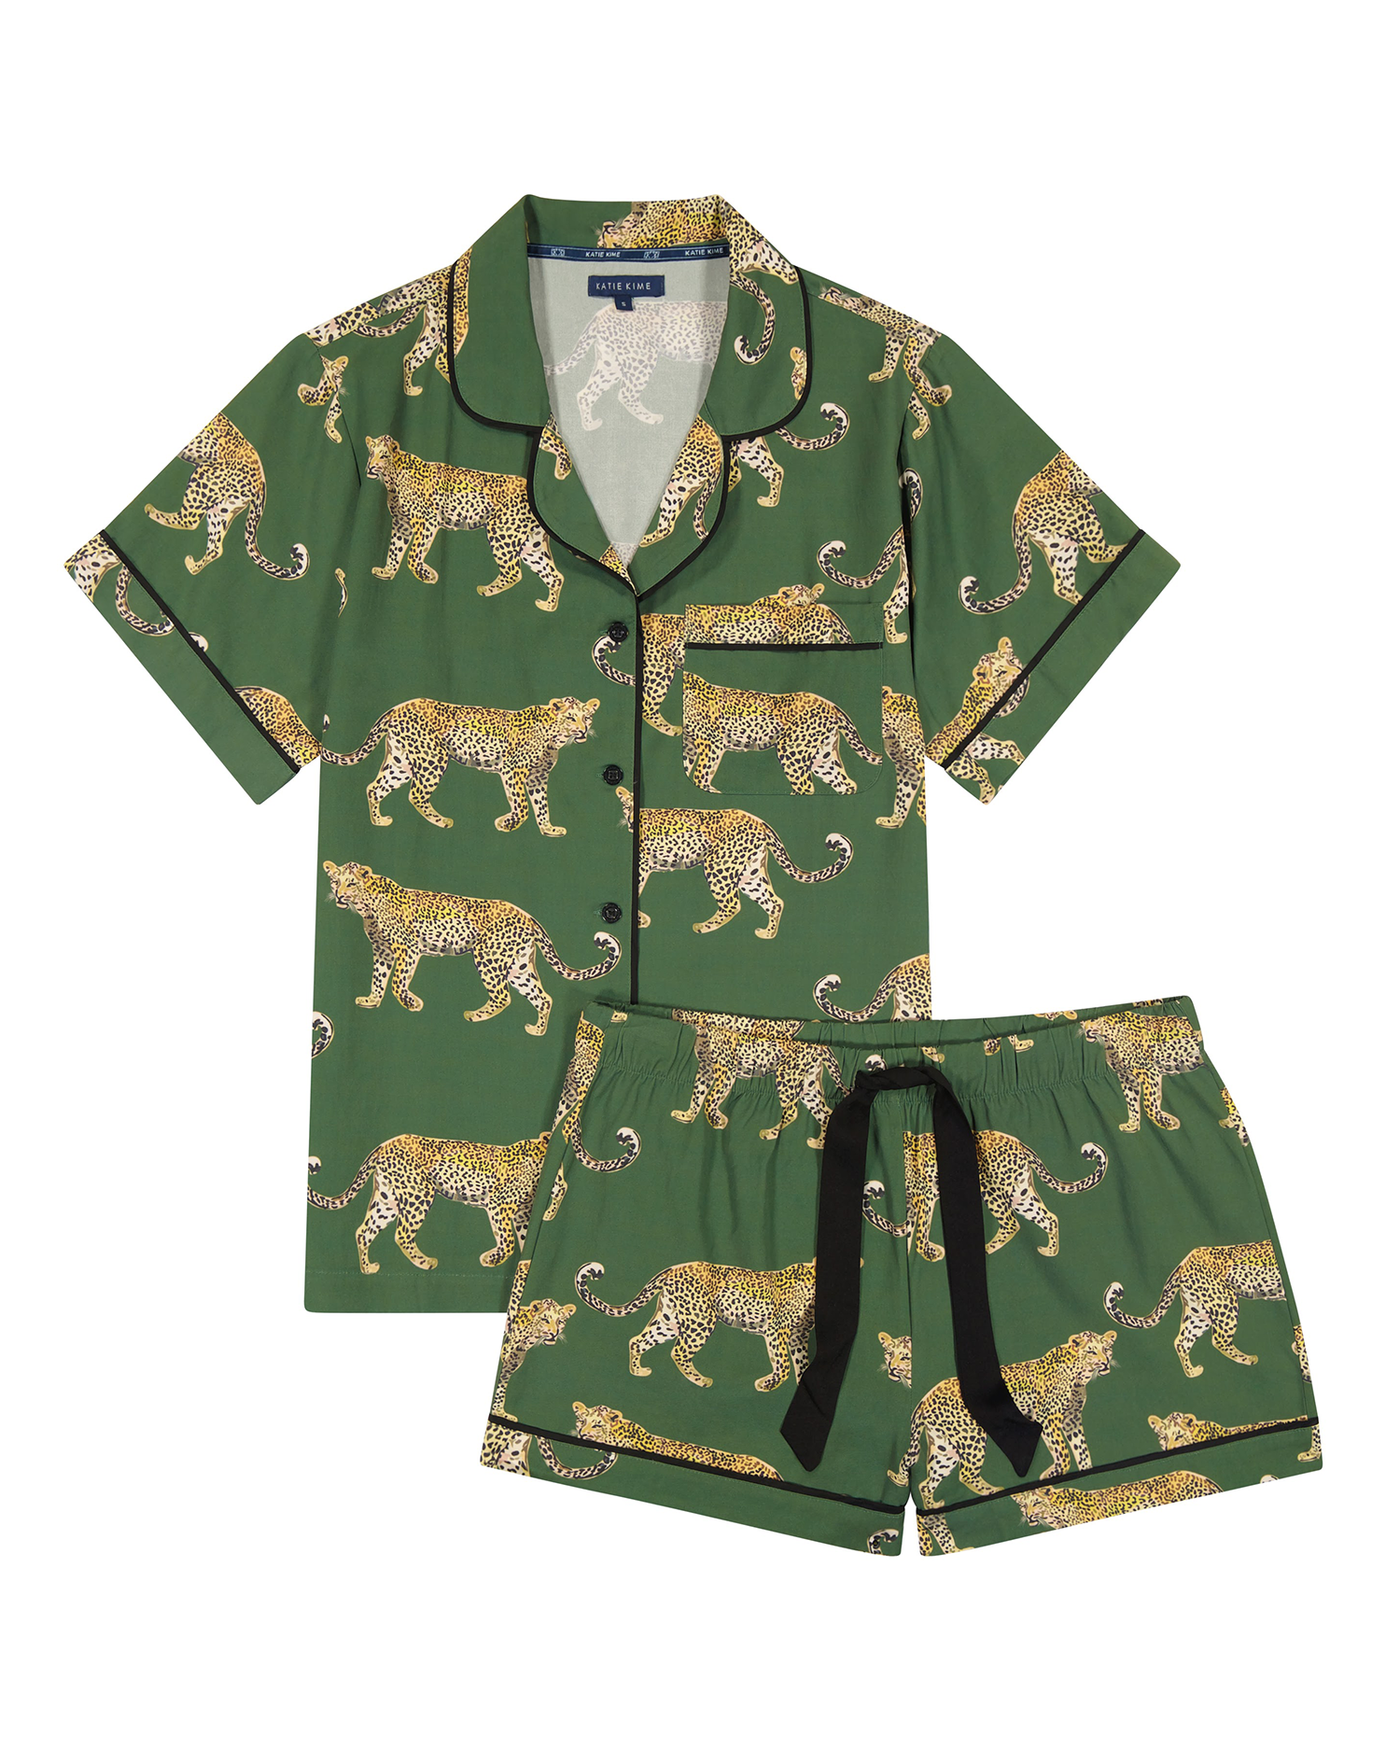 Green cheetah pajama short set Katie Kime